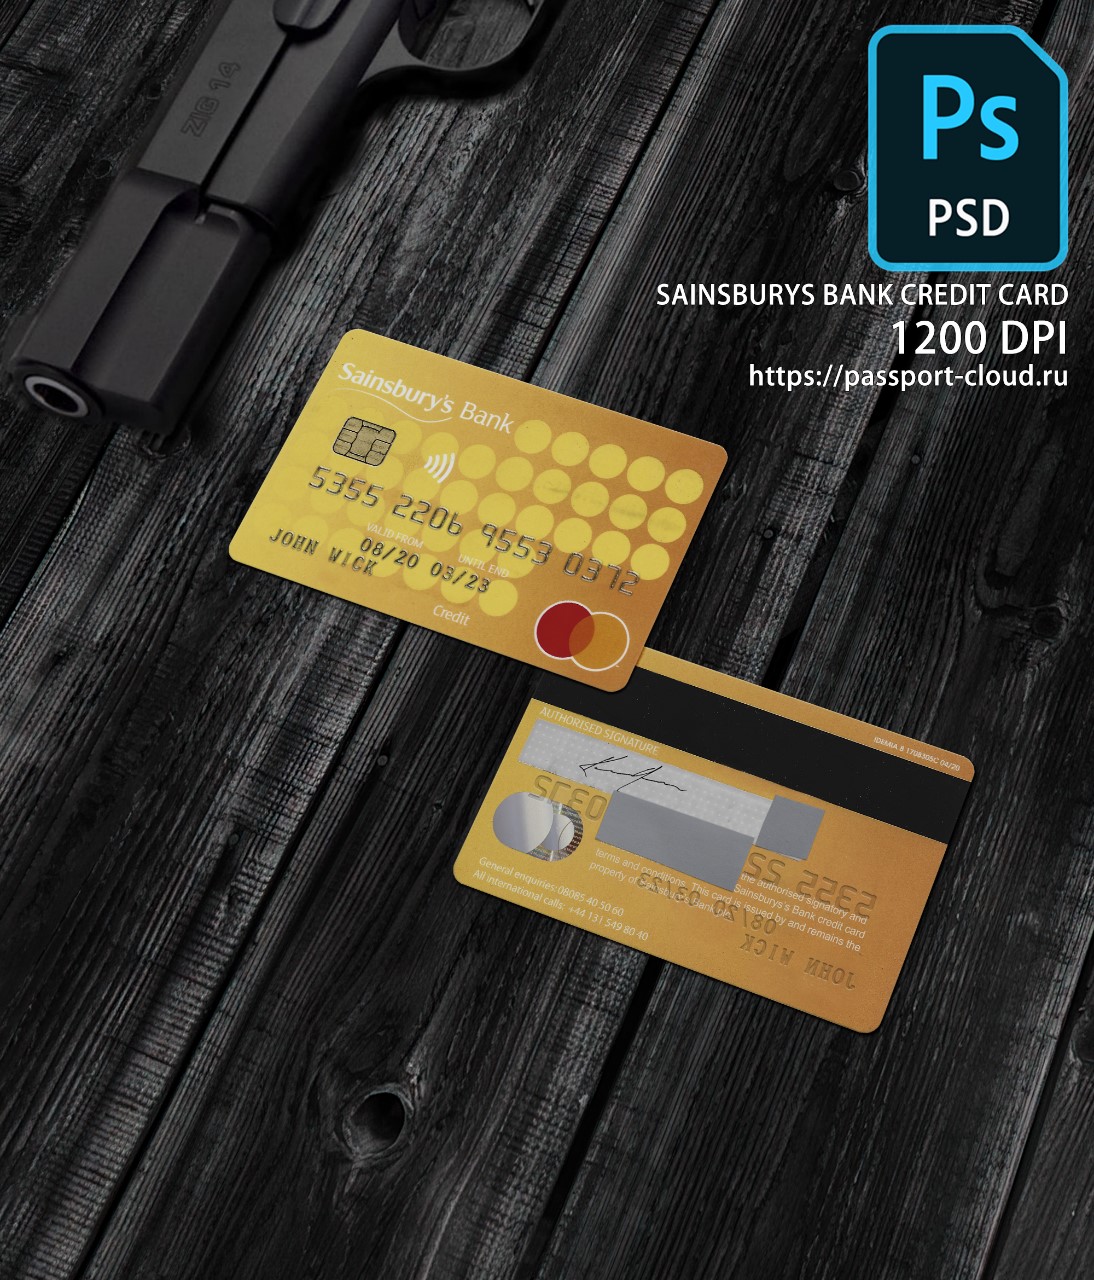 Sainsbury's Bank Credit Card PSD1